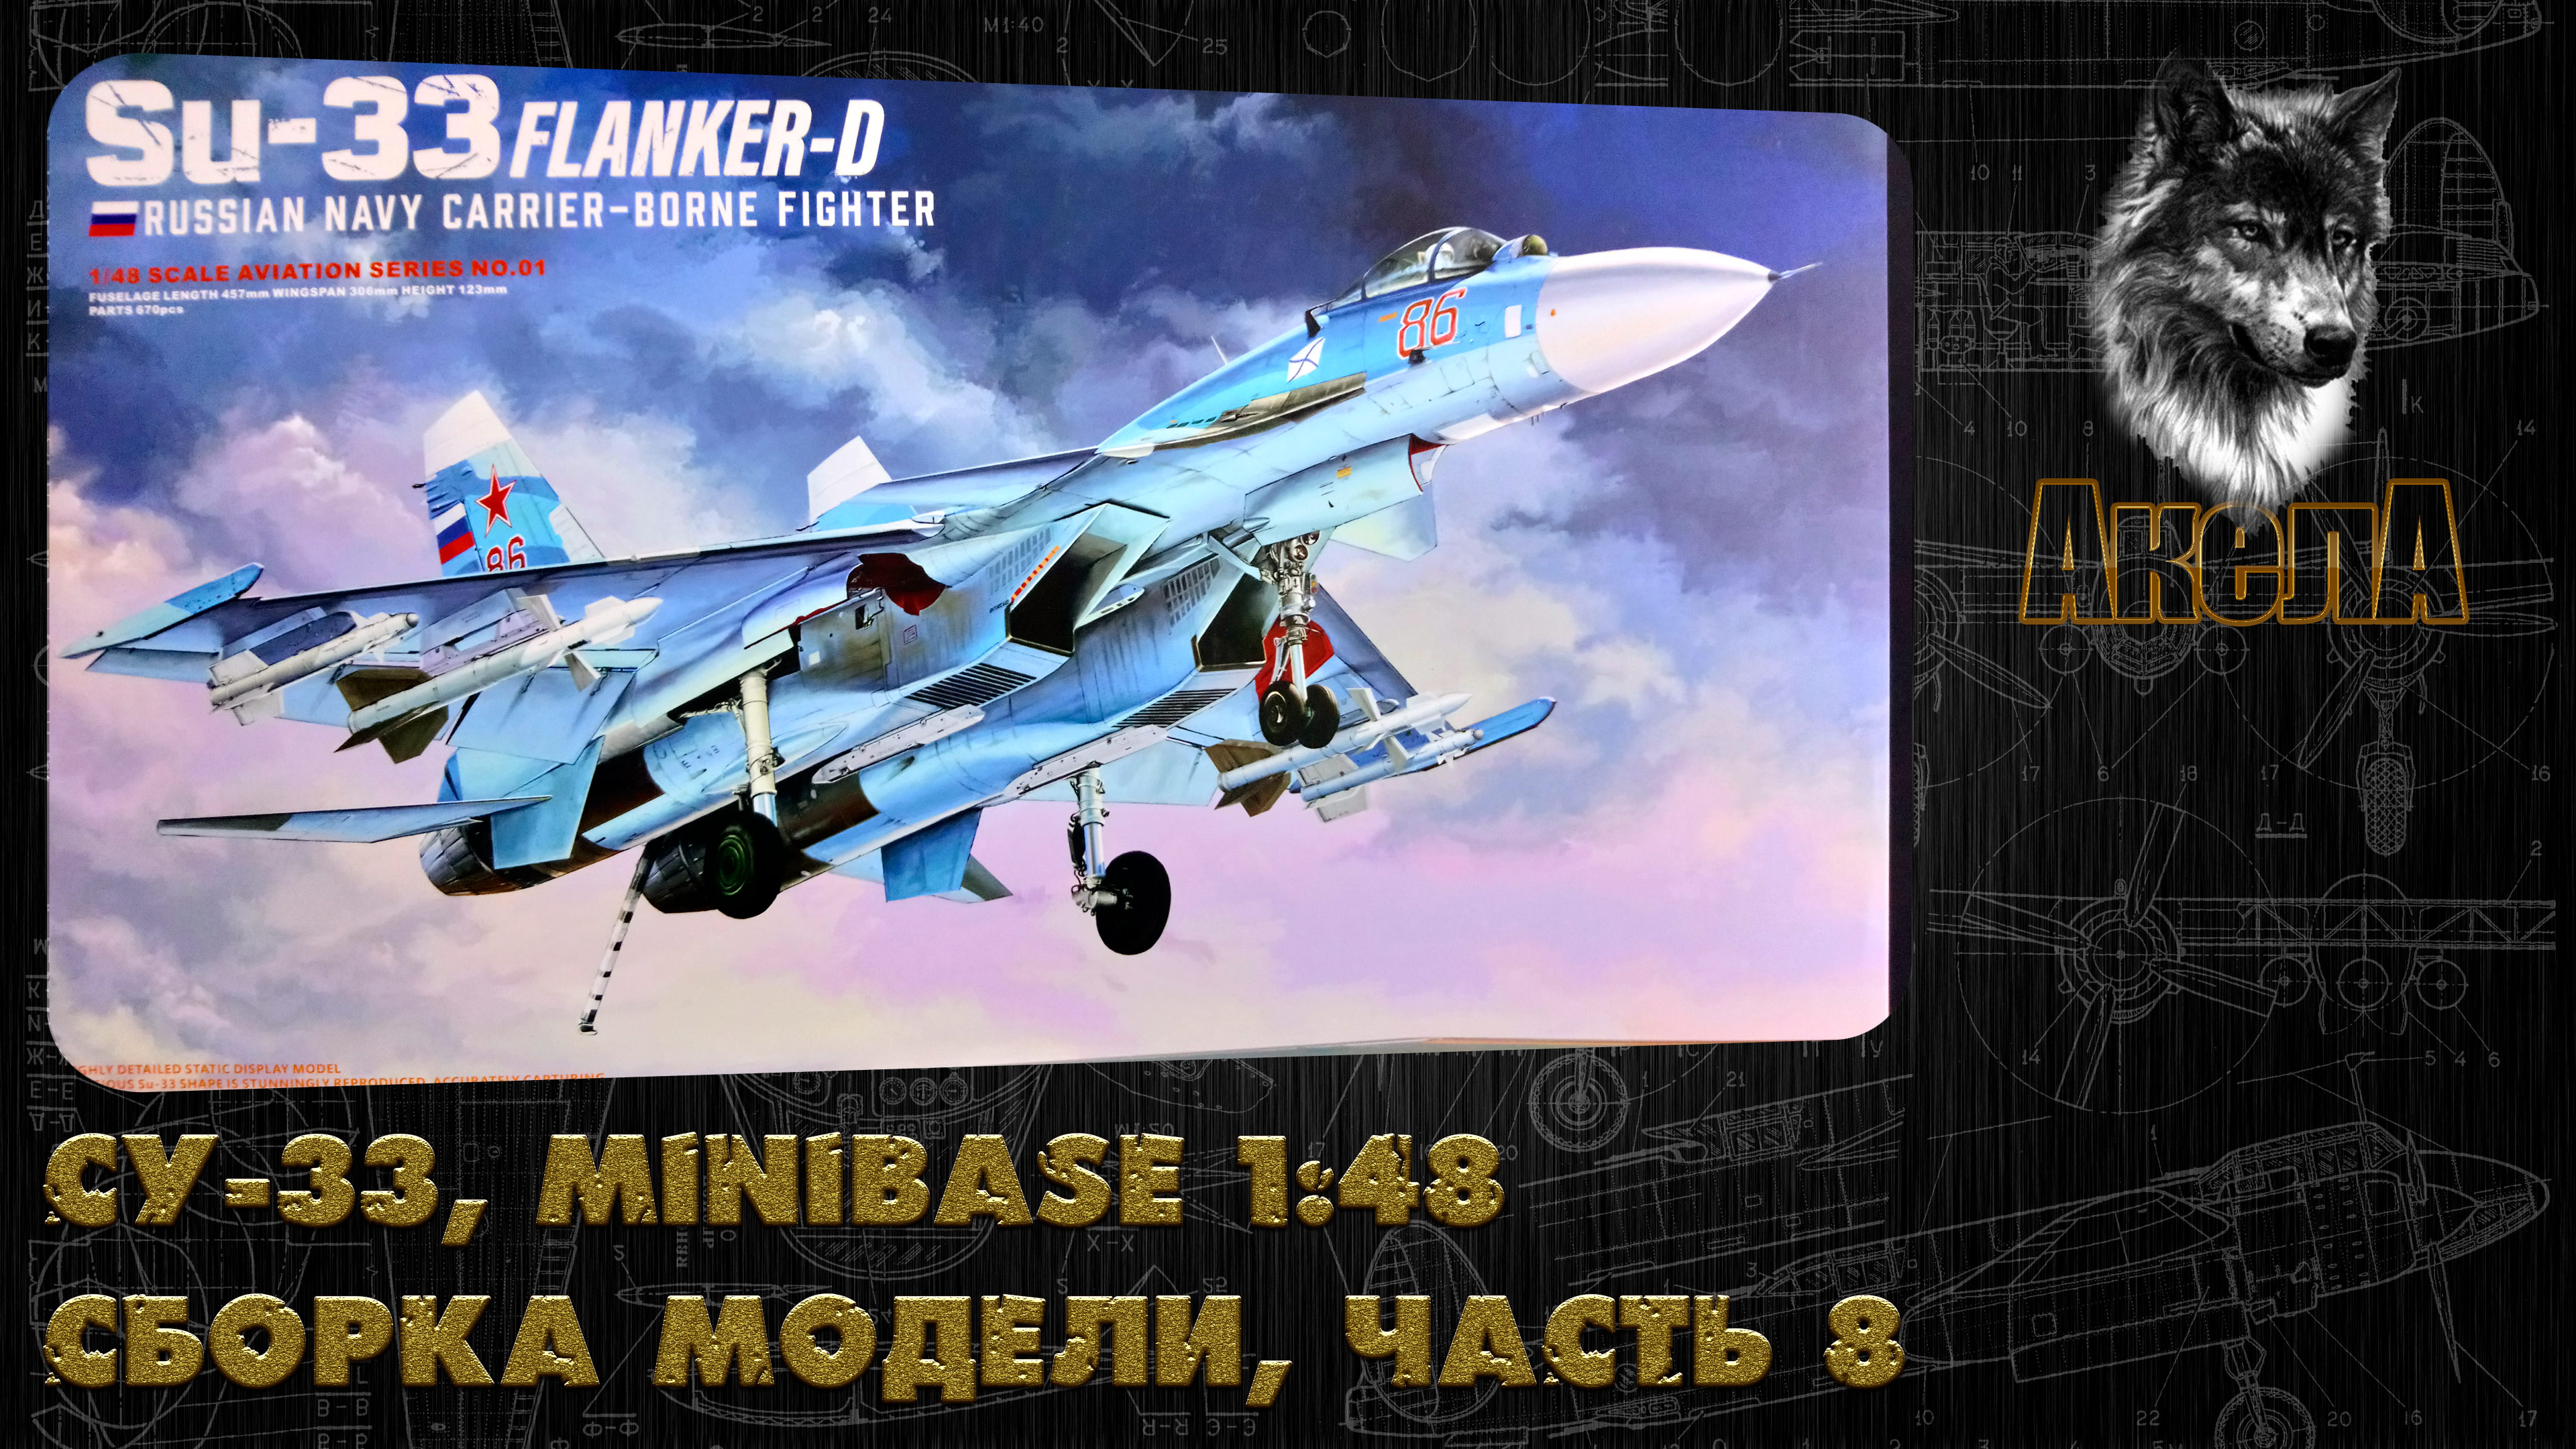 Су-33, Minibase 1/48, сборка модели, часть 8